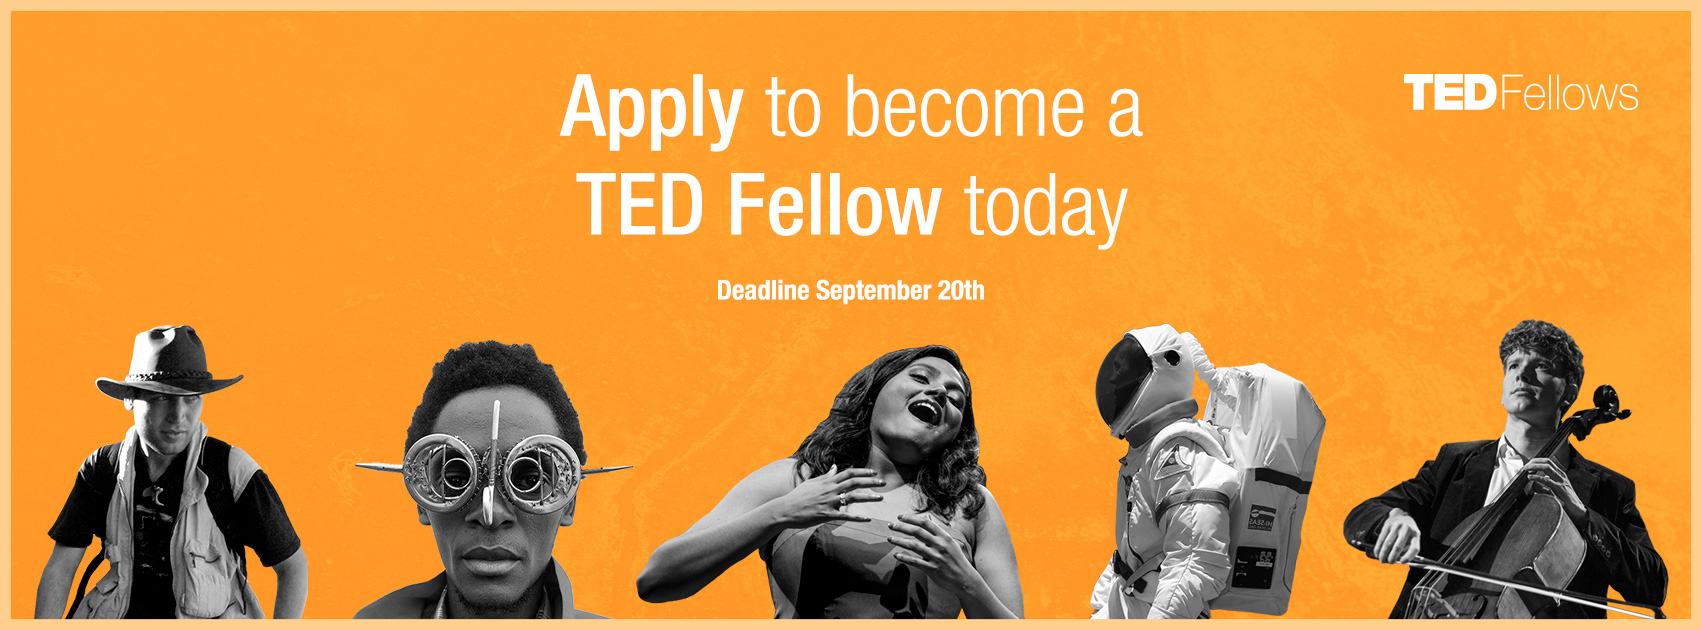 TED2016 Fellowship application 